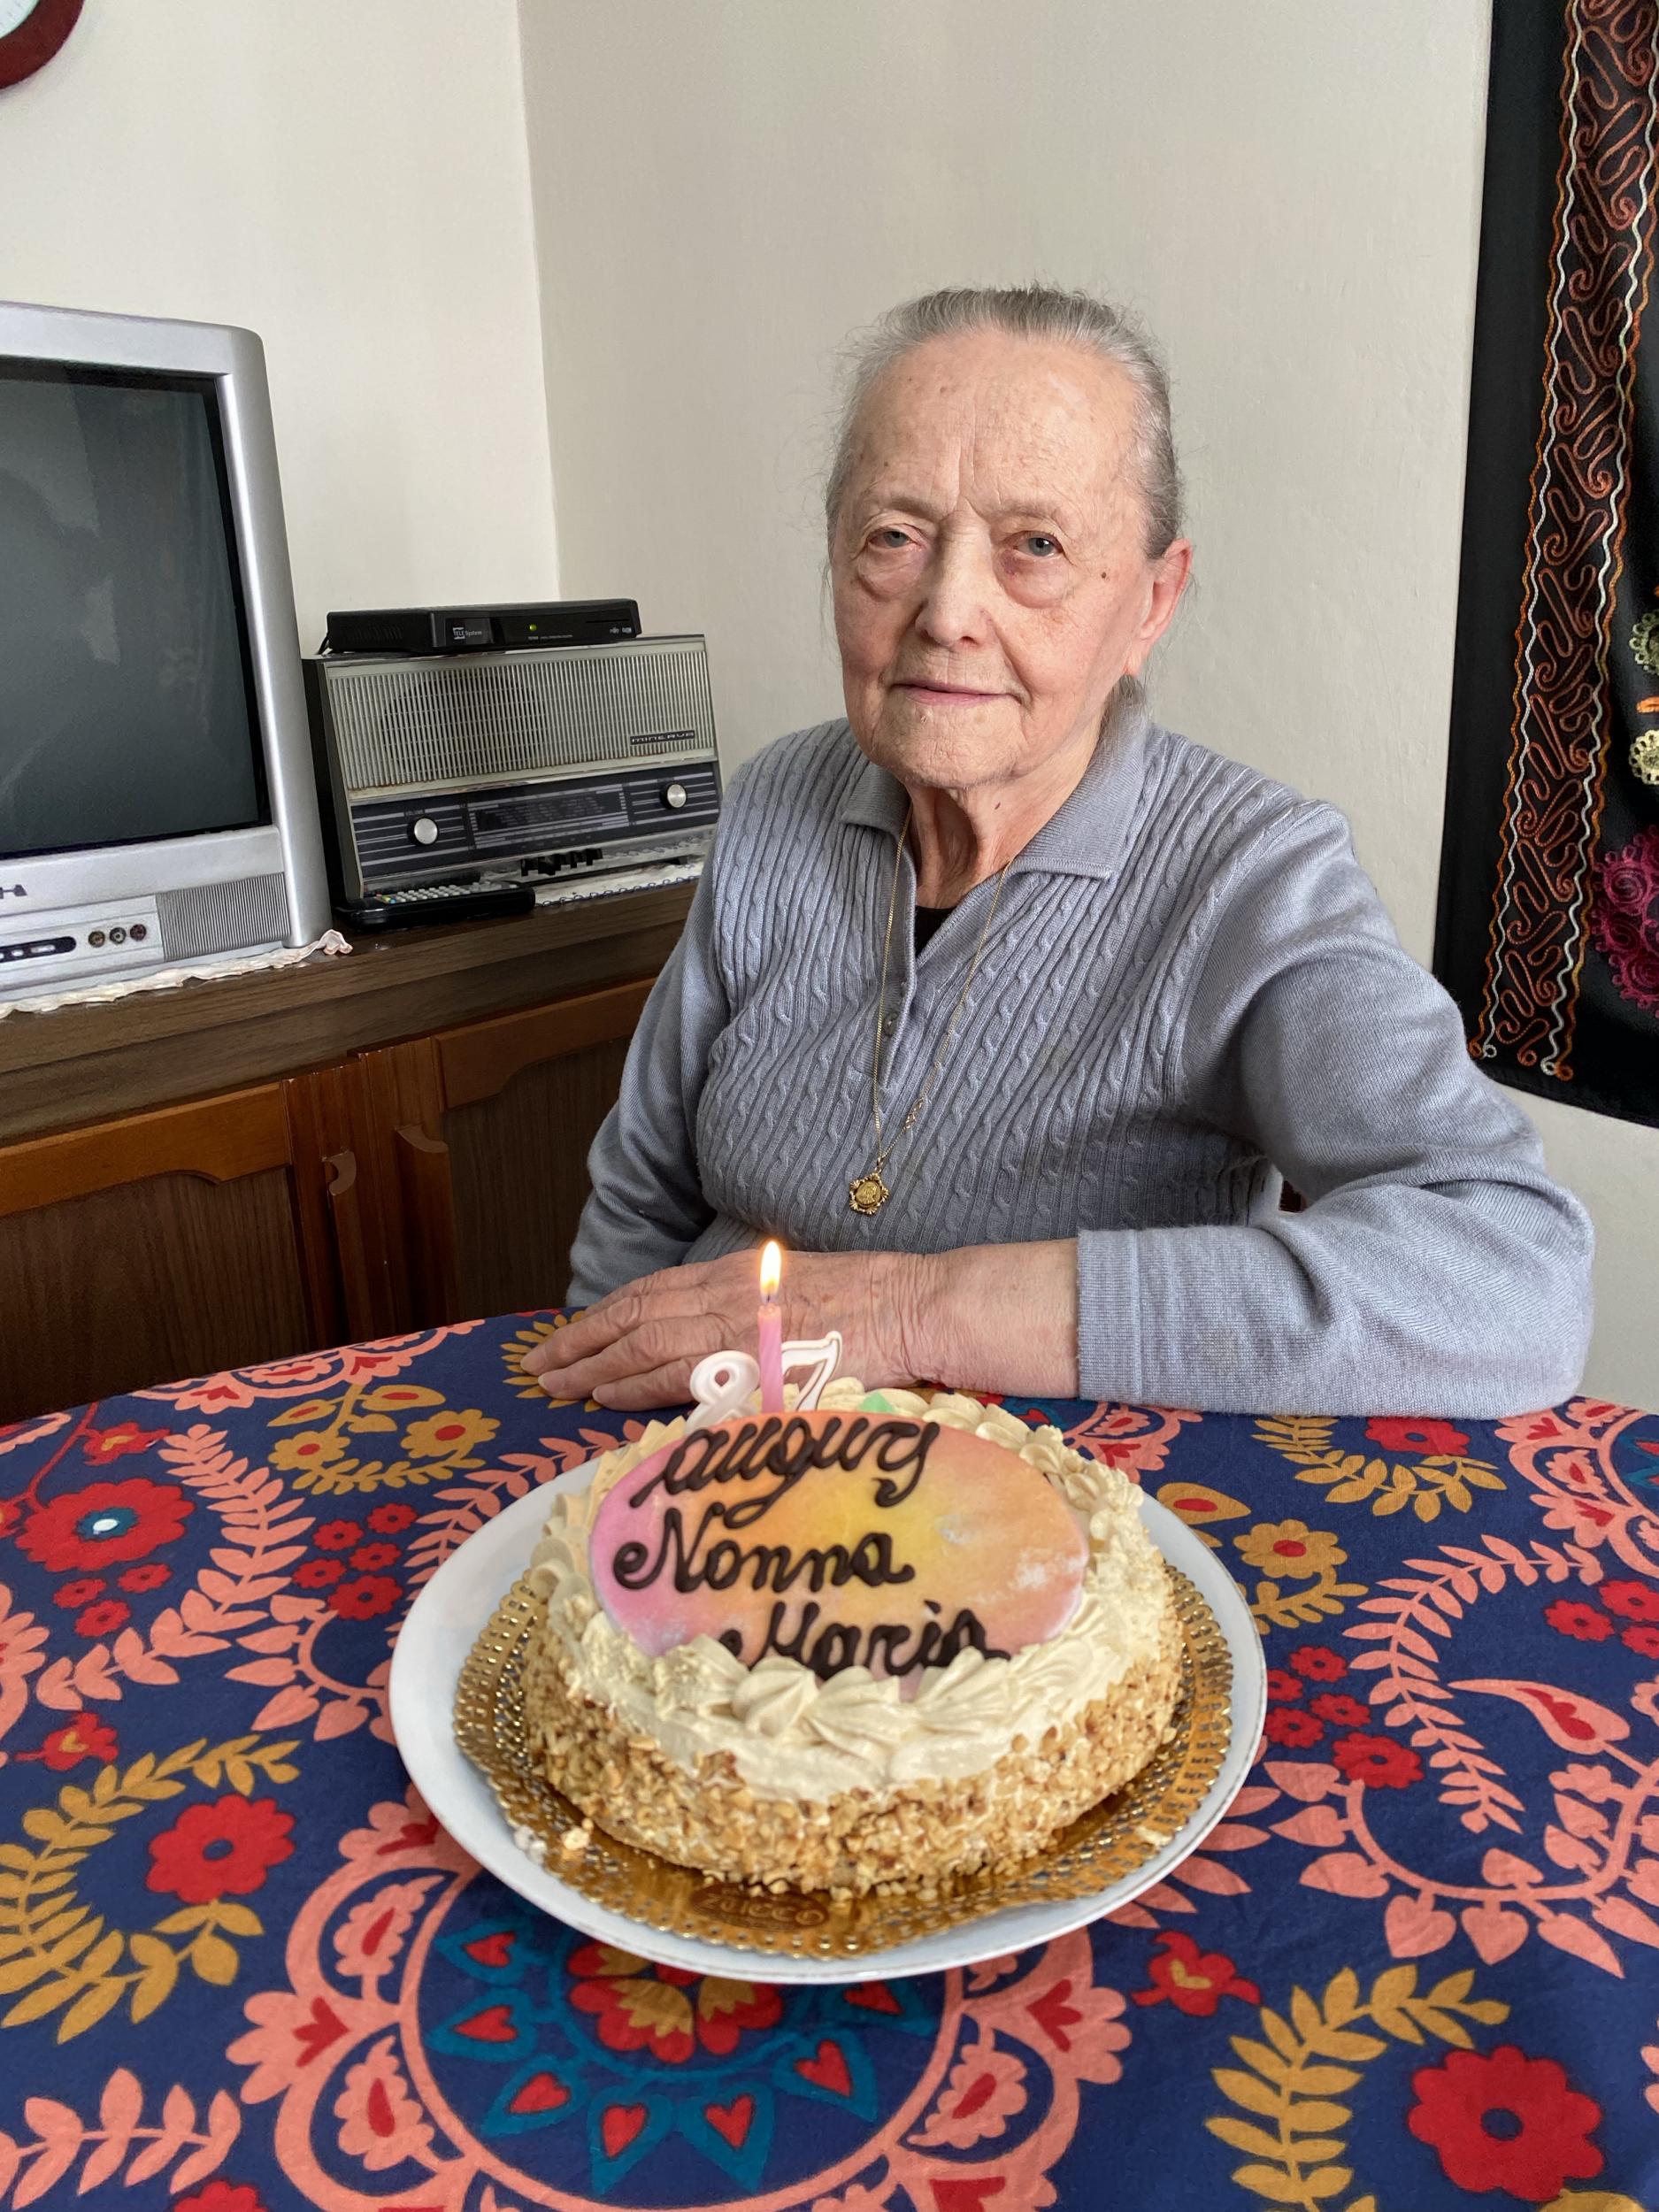 Gianluca Avagnina's grandmother celebrating her birthday in Italy